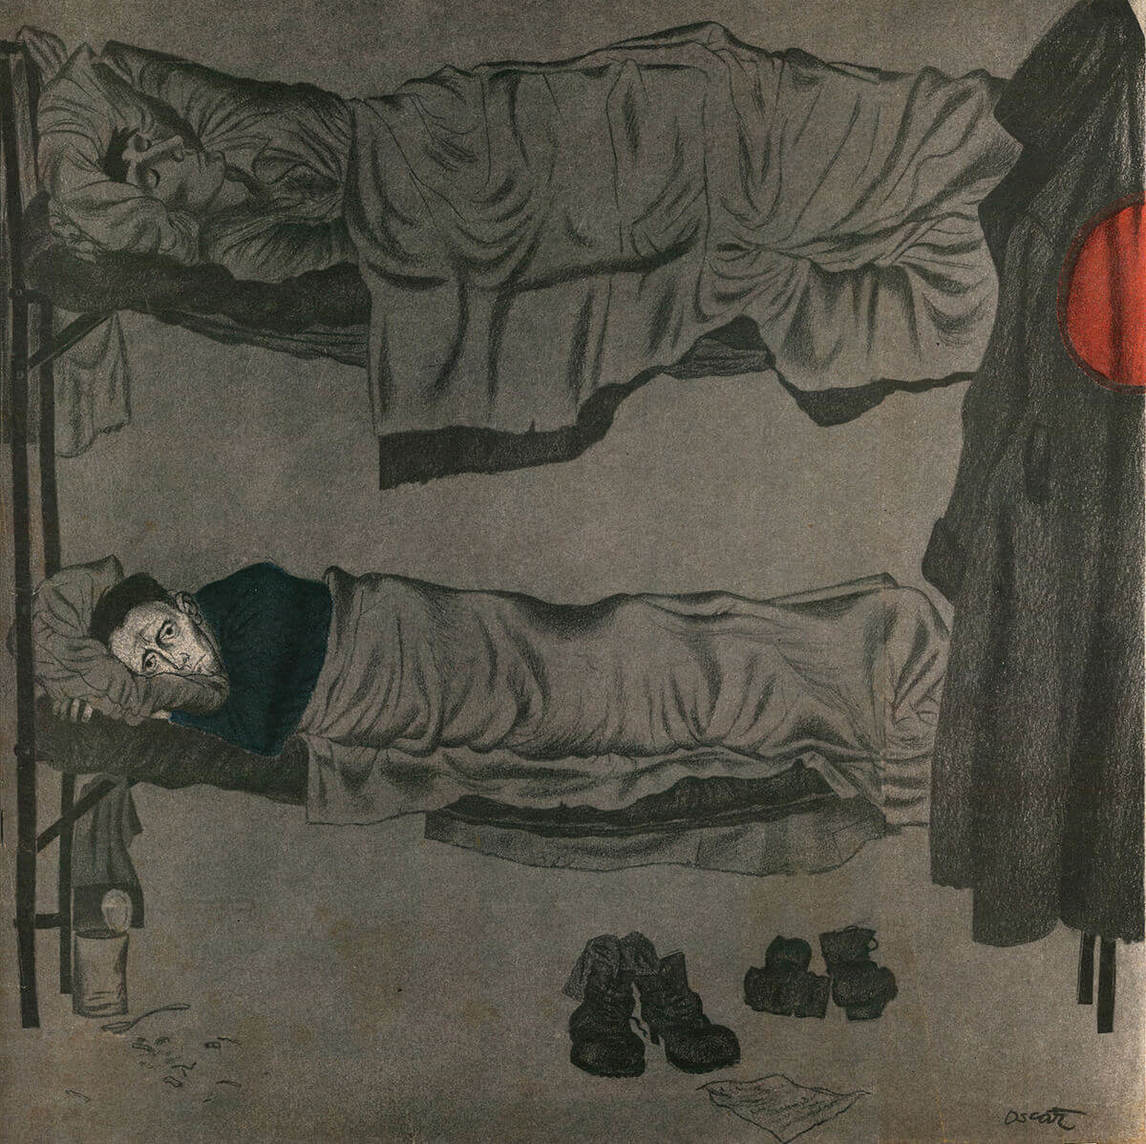 Art Canada Institute, Oscar Cahén, illustration for short story “Mail” by John Norman Harris, Maclean’s Magazine, tear sheet, 1950